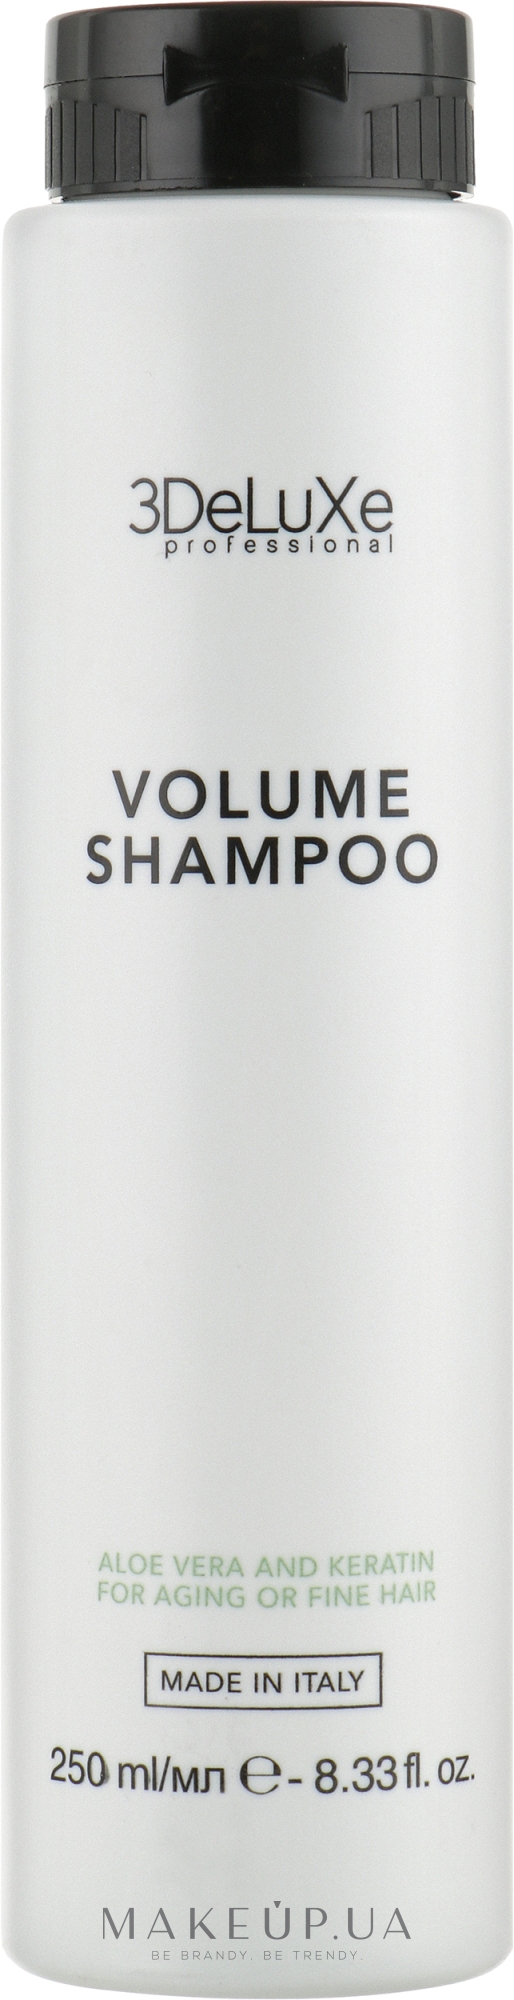 Шампунь для об'єму волосся - 3DeLuXe Volume Shampoo — фото 250ml